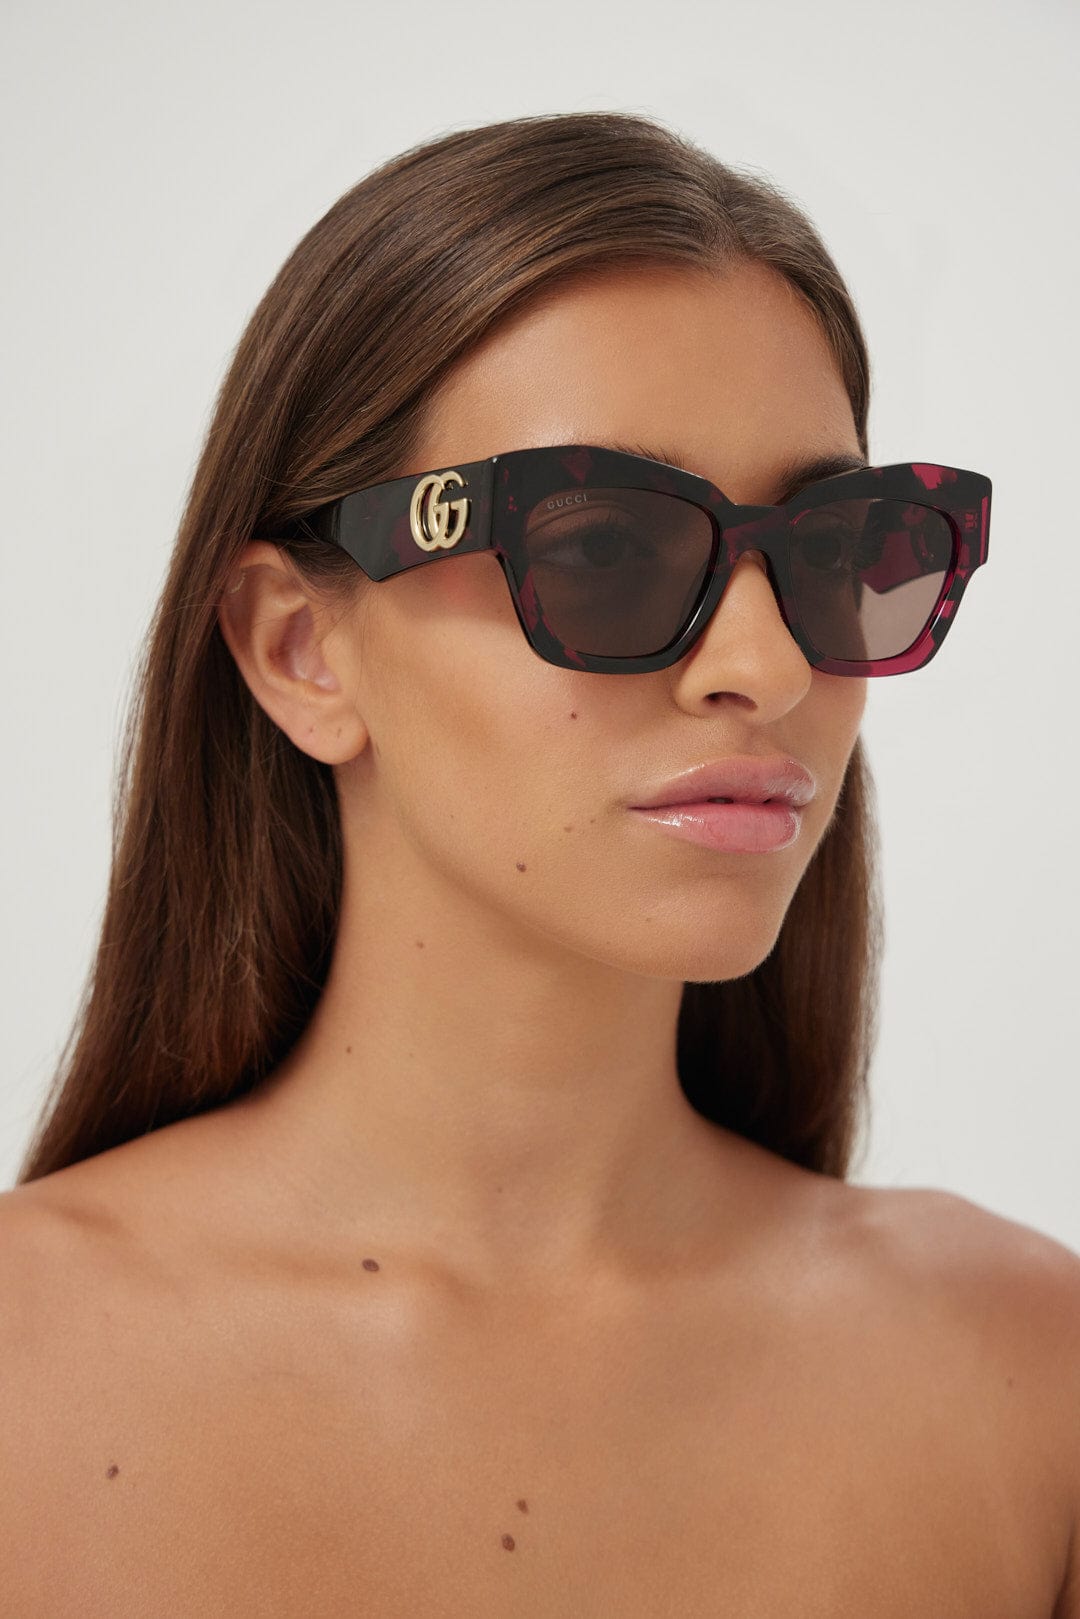 Gucci pink chuncky cat eye sunglasses - Eyewear Club